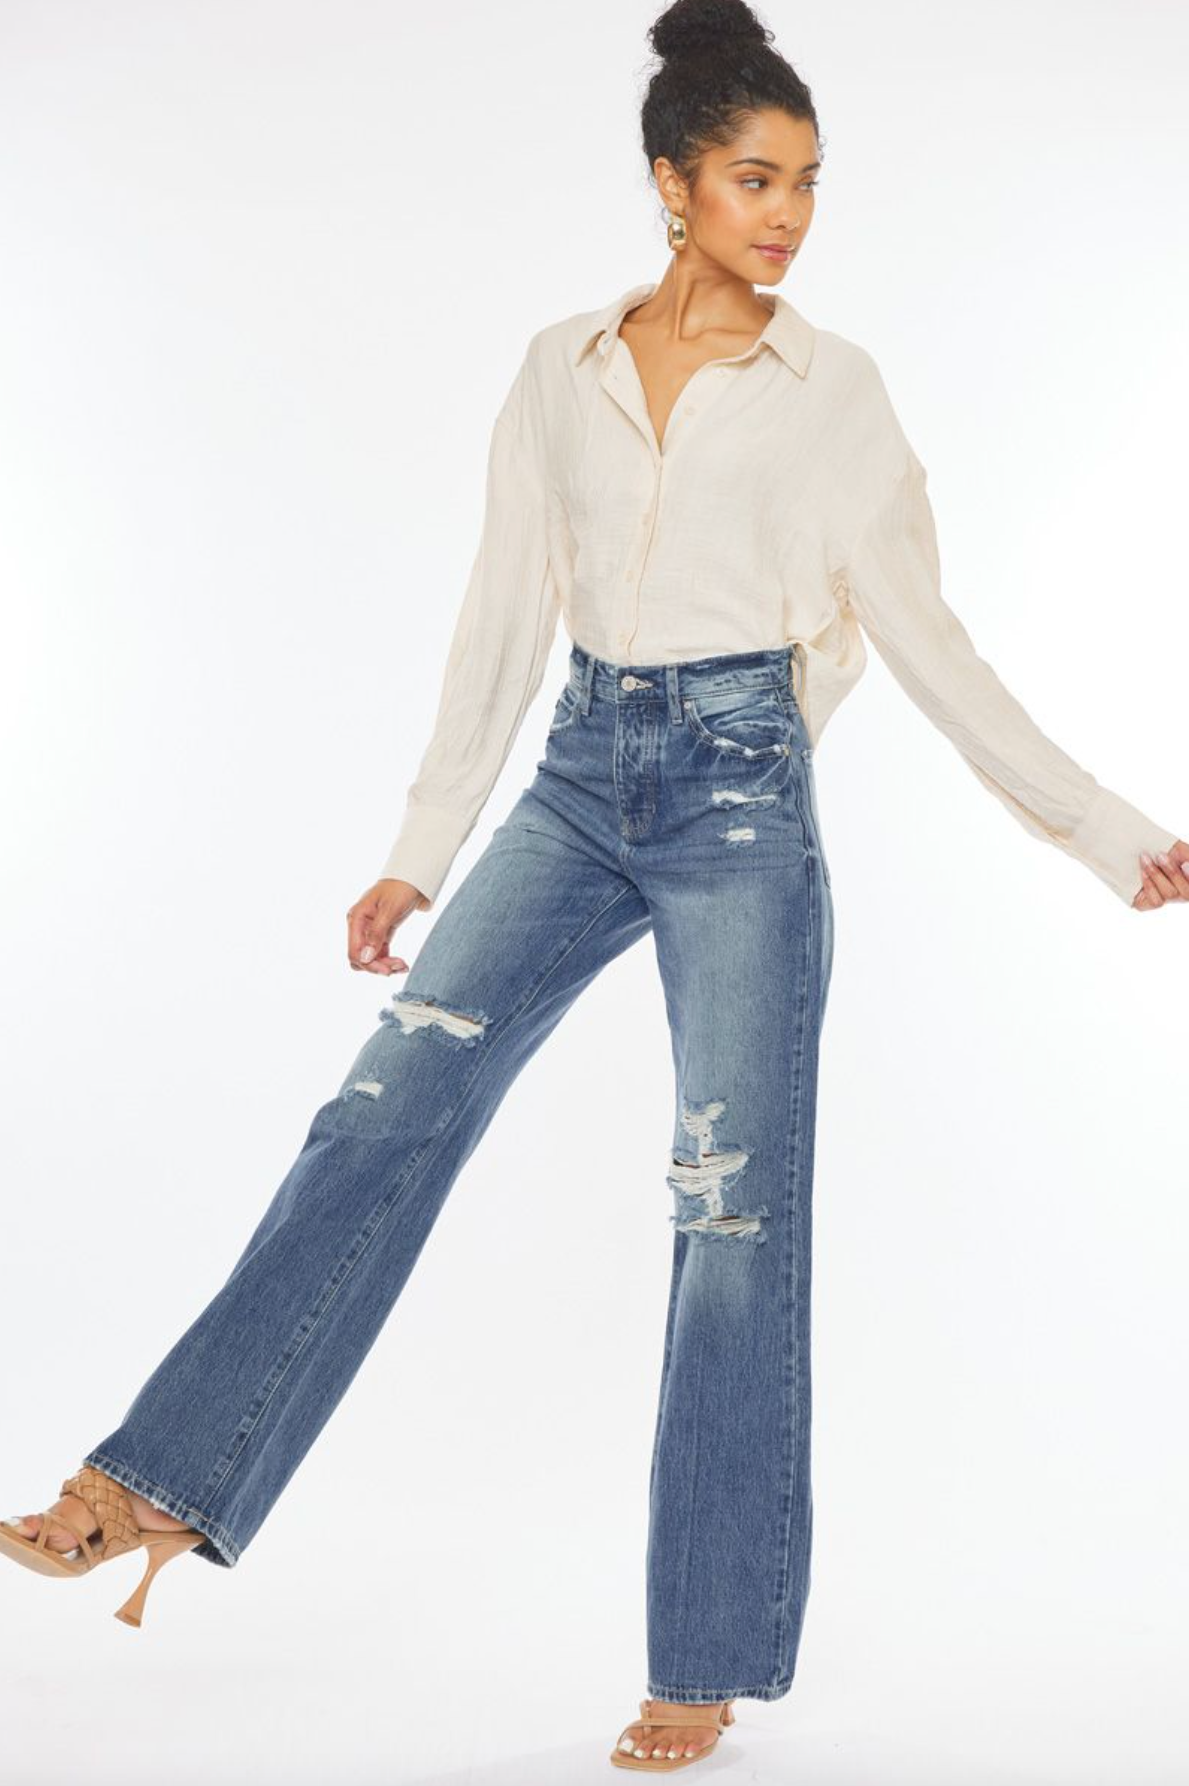 90's Girl Jeans